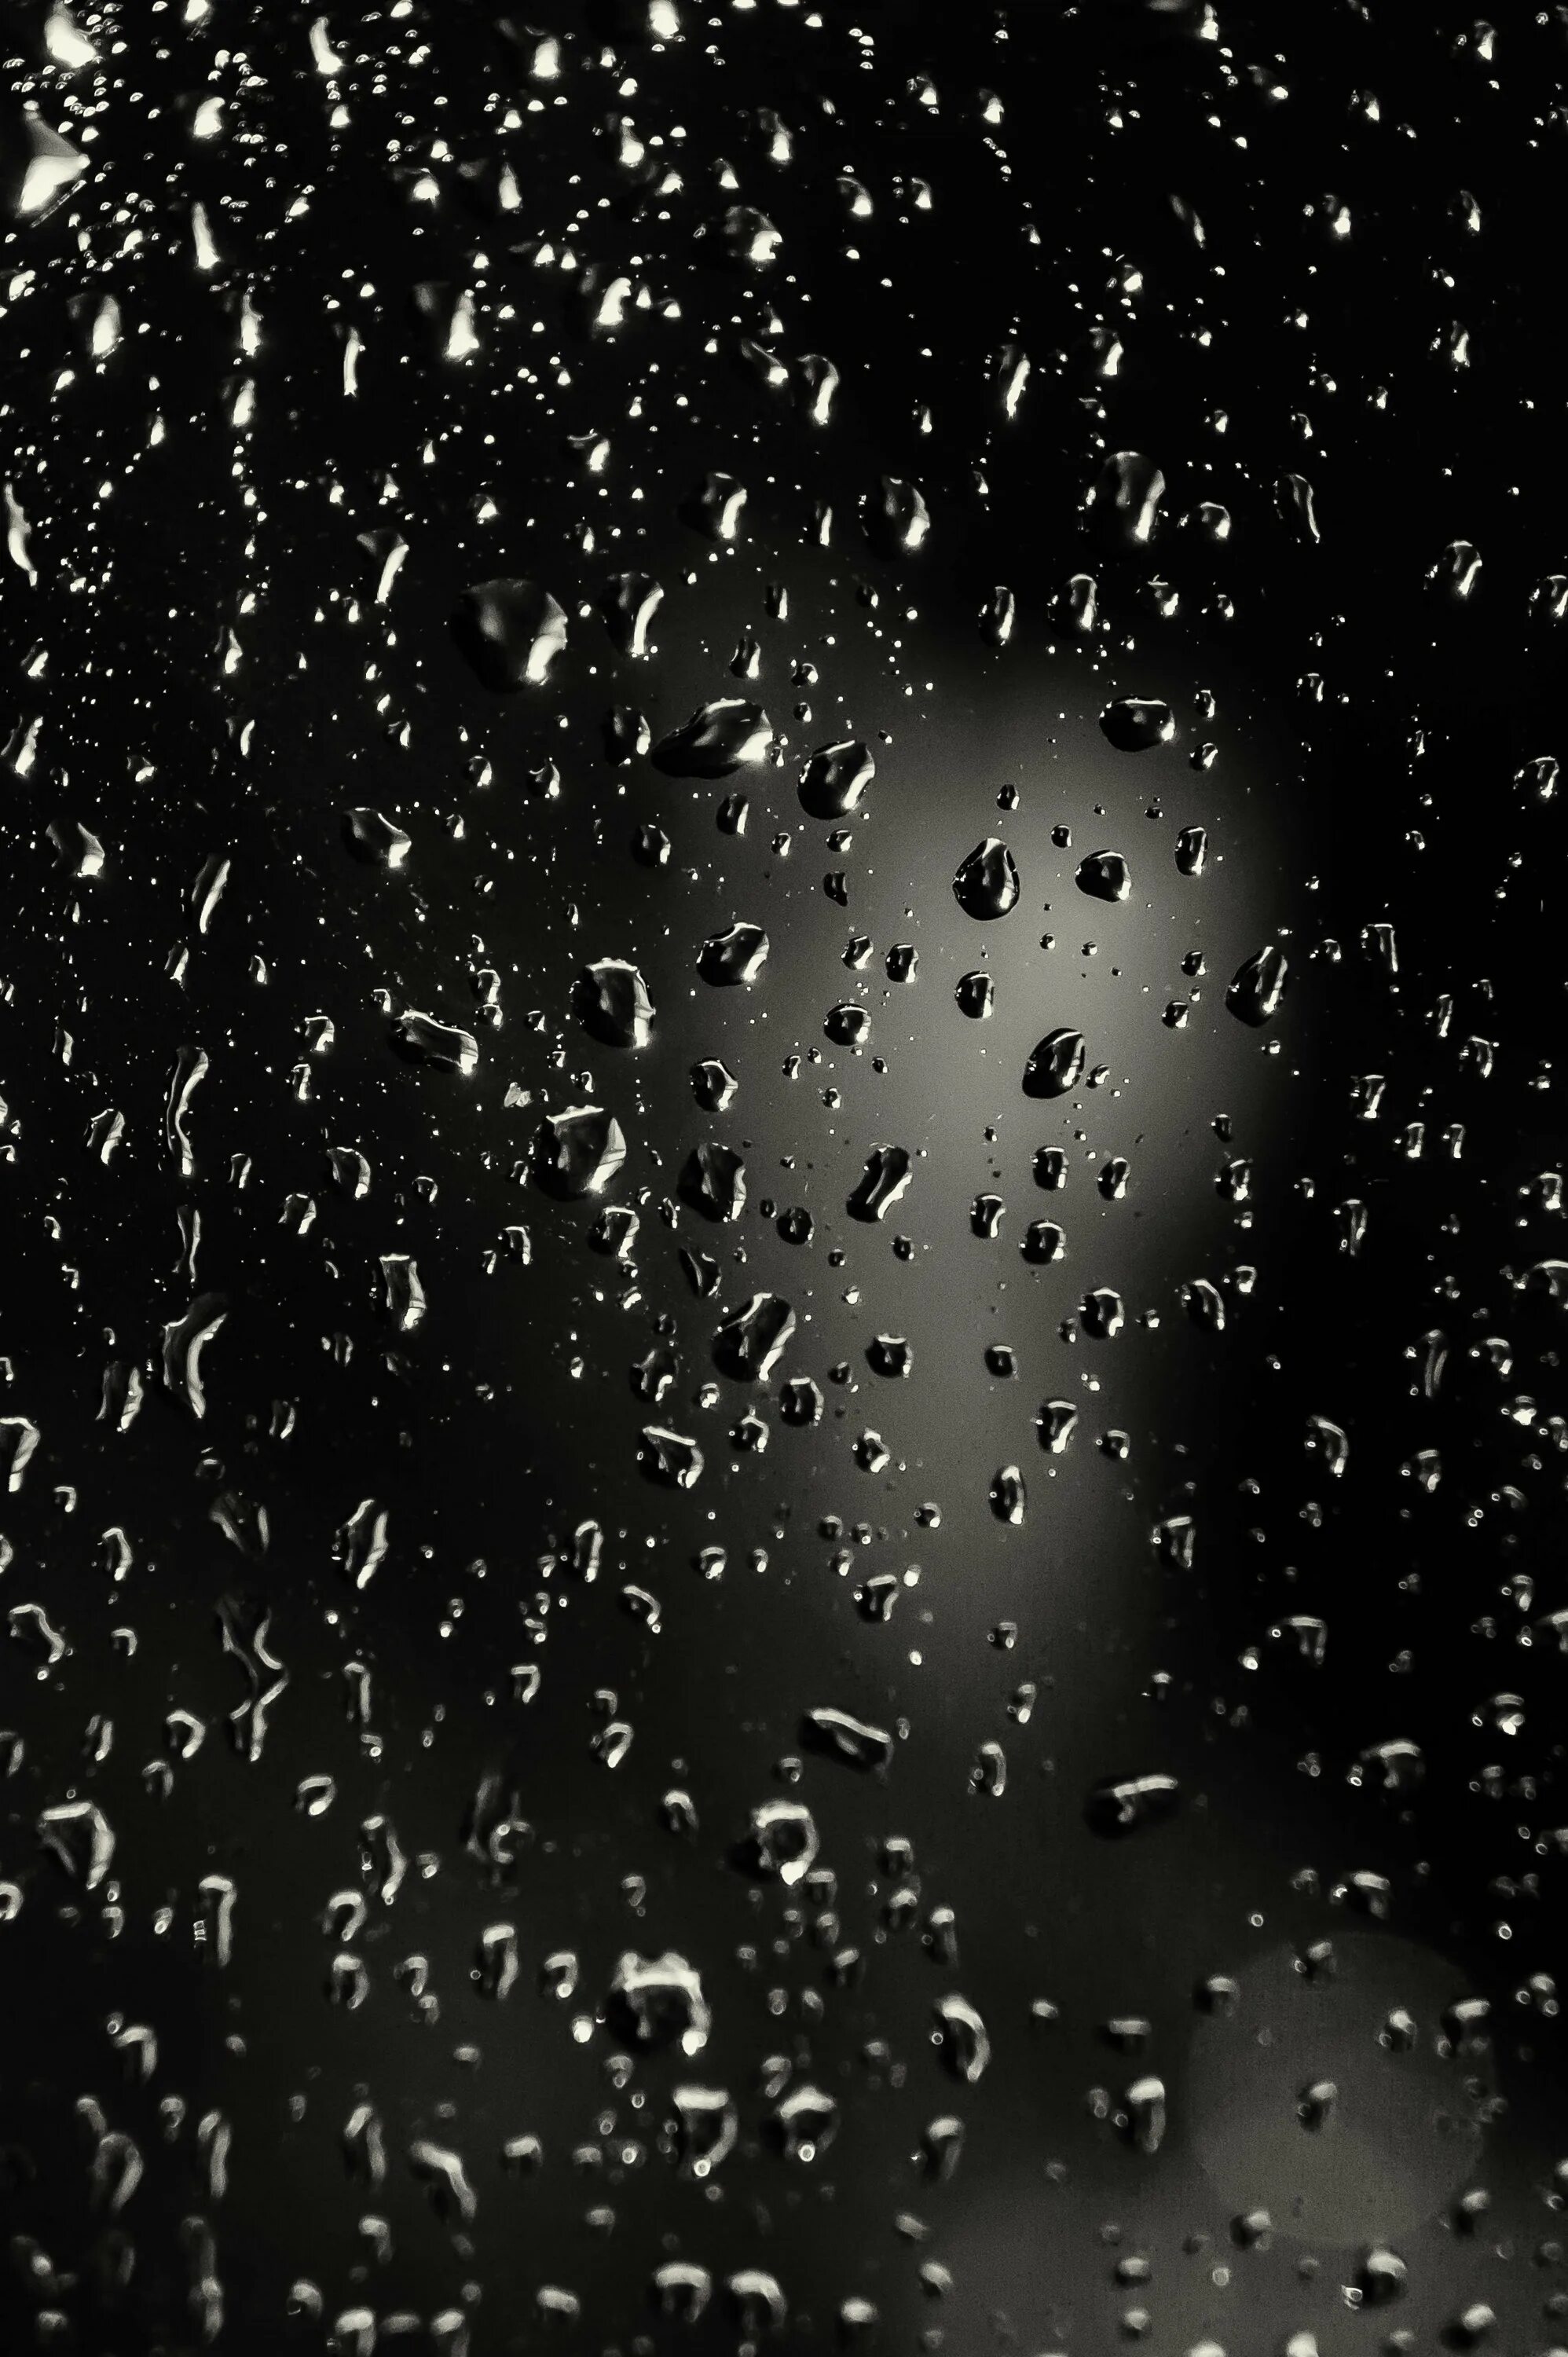 Капли на стекле. Капли дождя. Мокрое стекло. Капли воды на стекле. Стекло на черном фоне